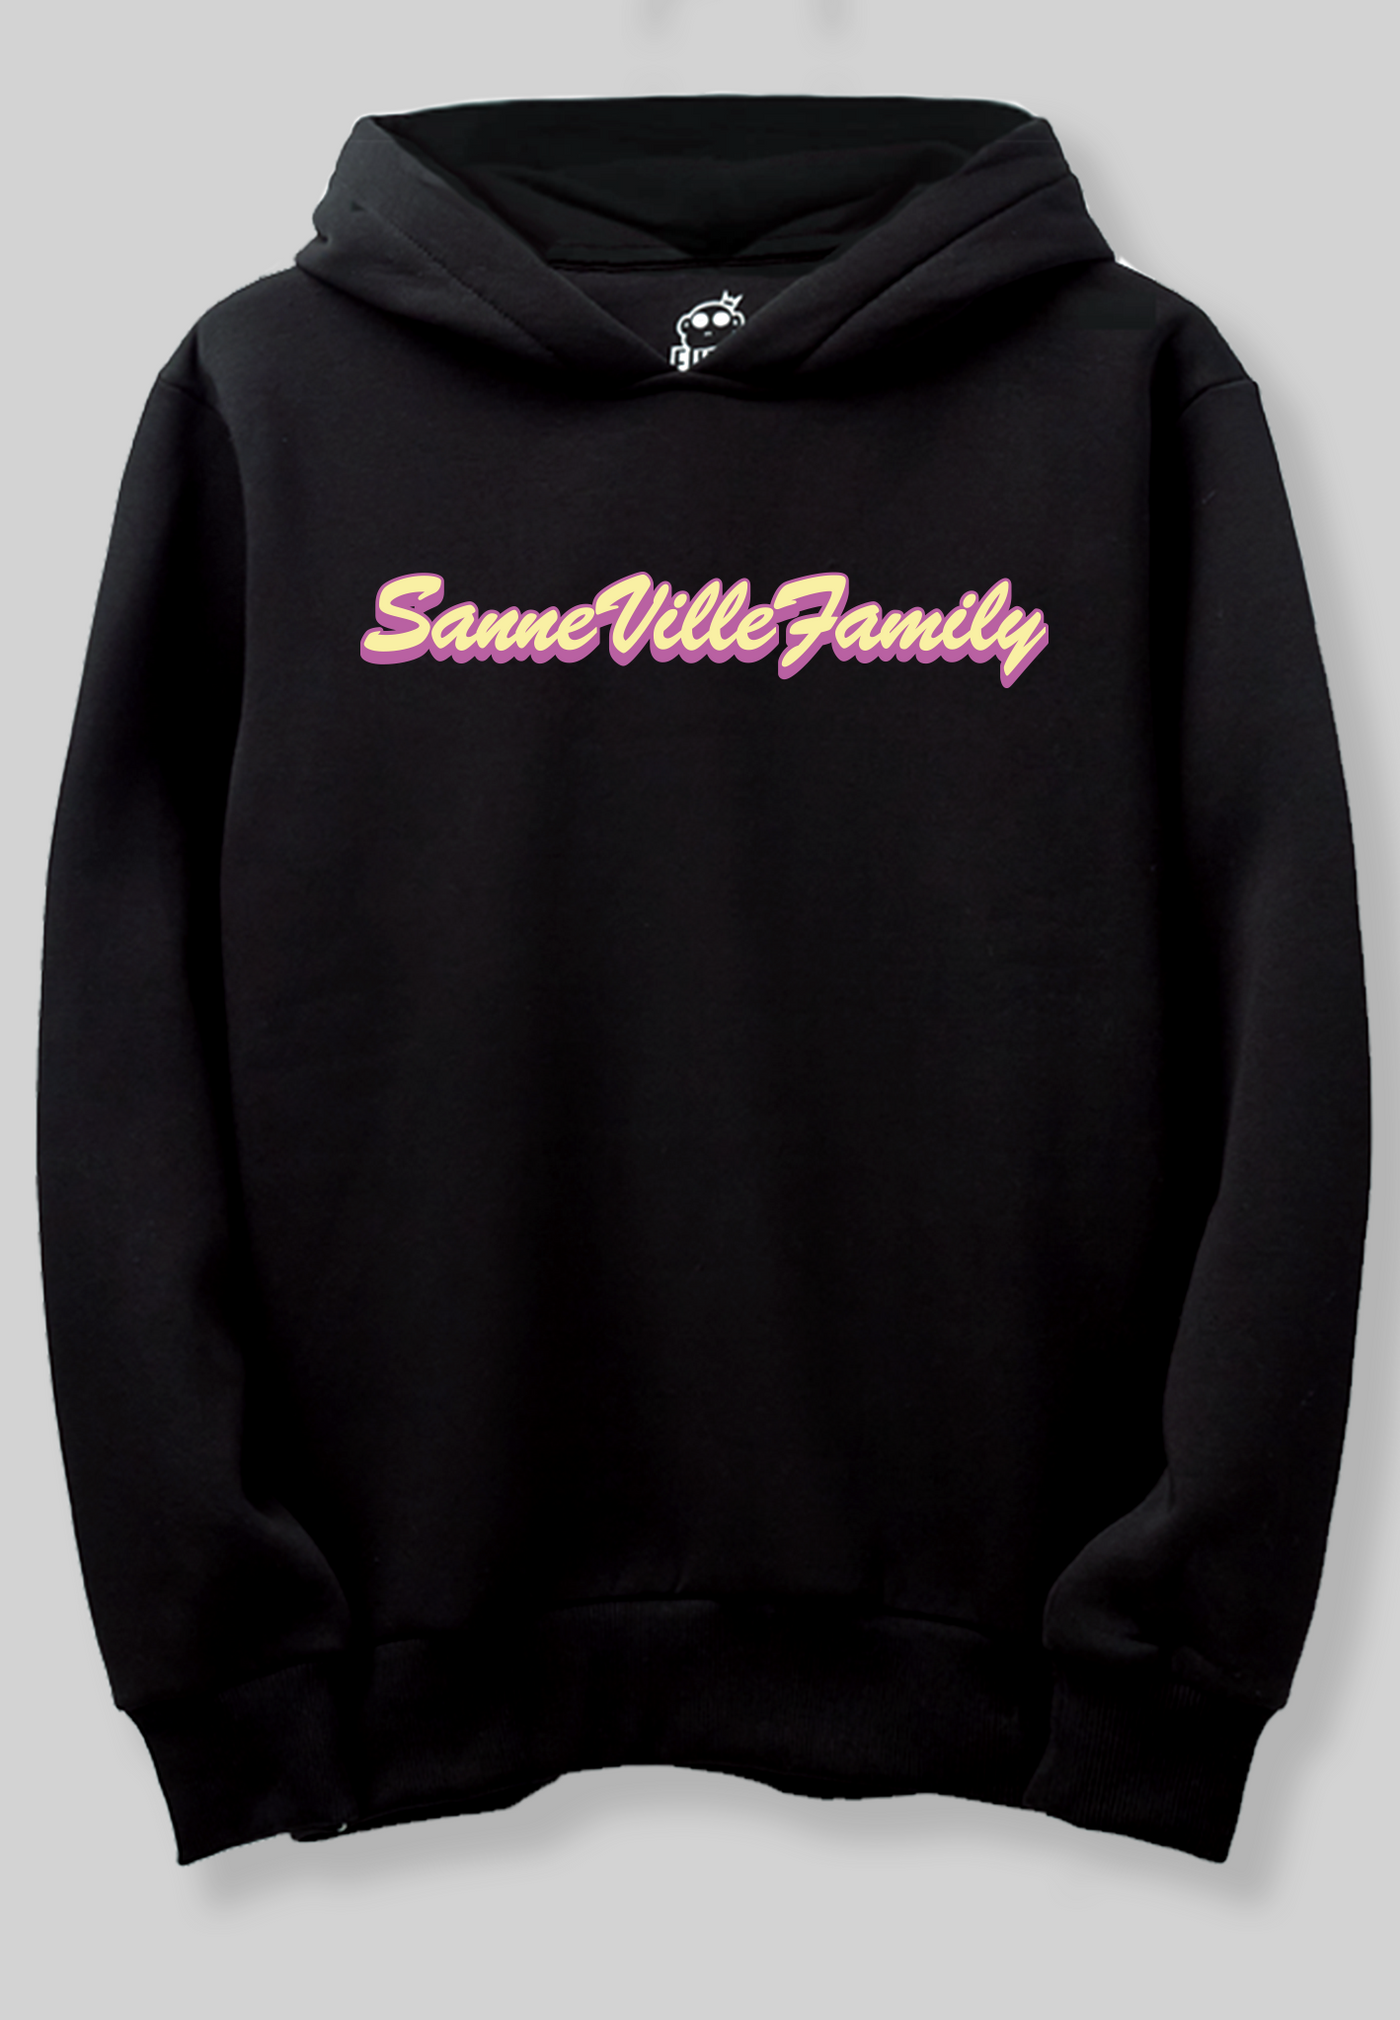 SanneVilleFamily - Text - Black hoodie